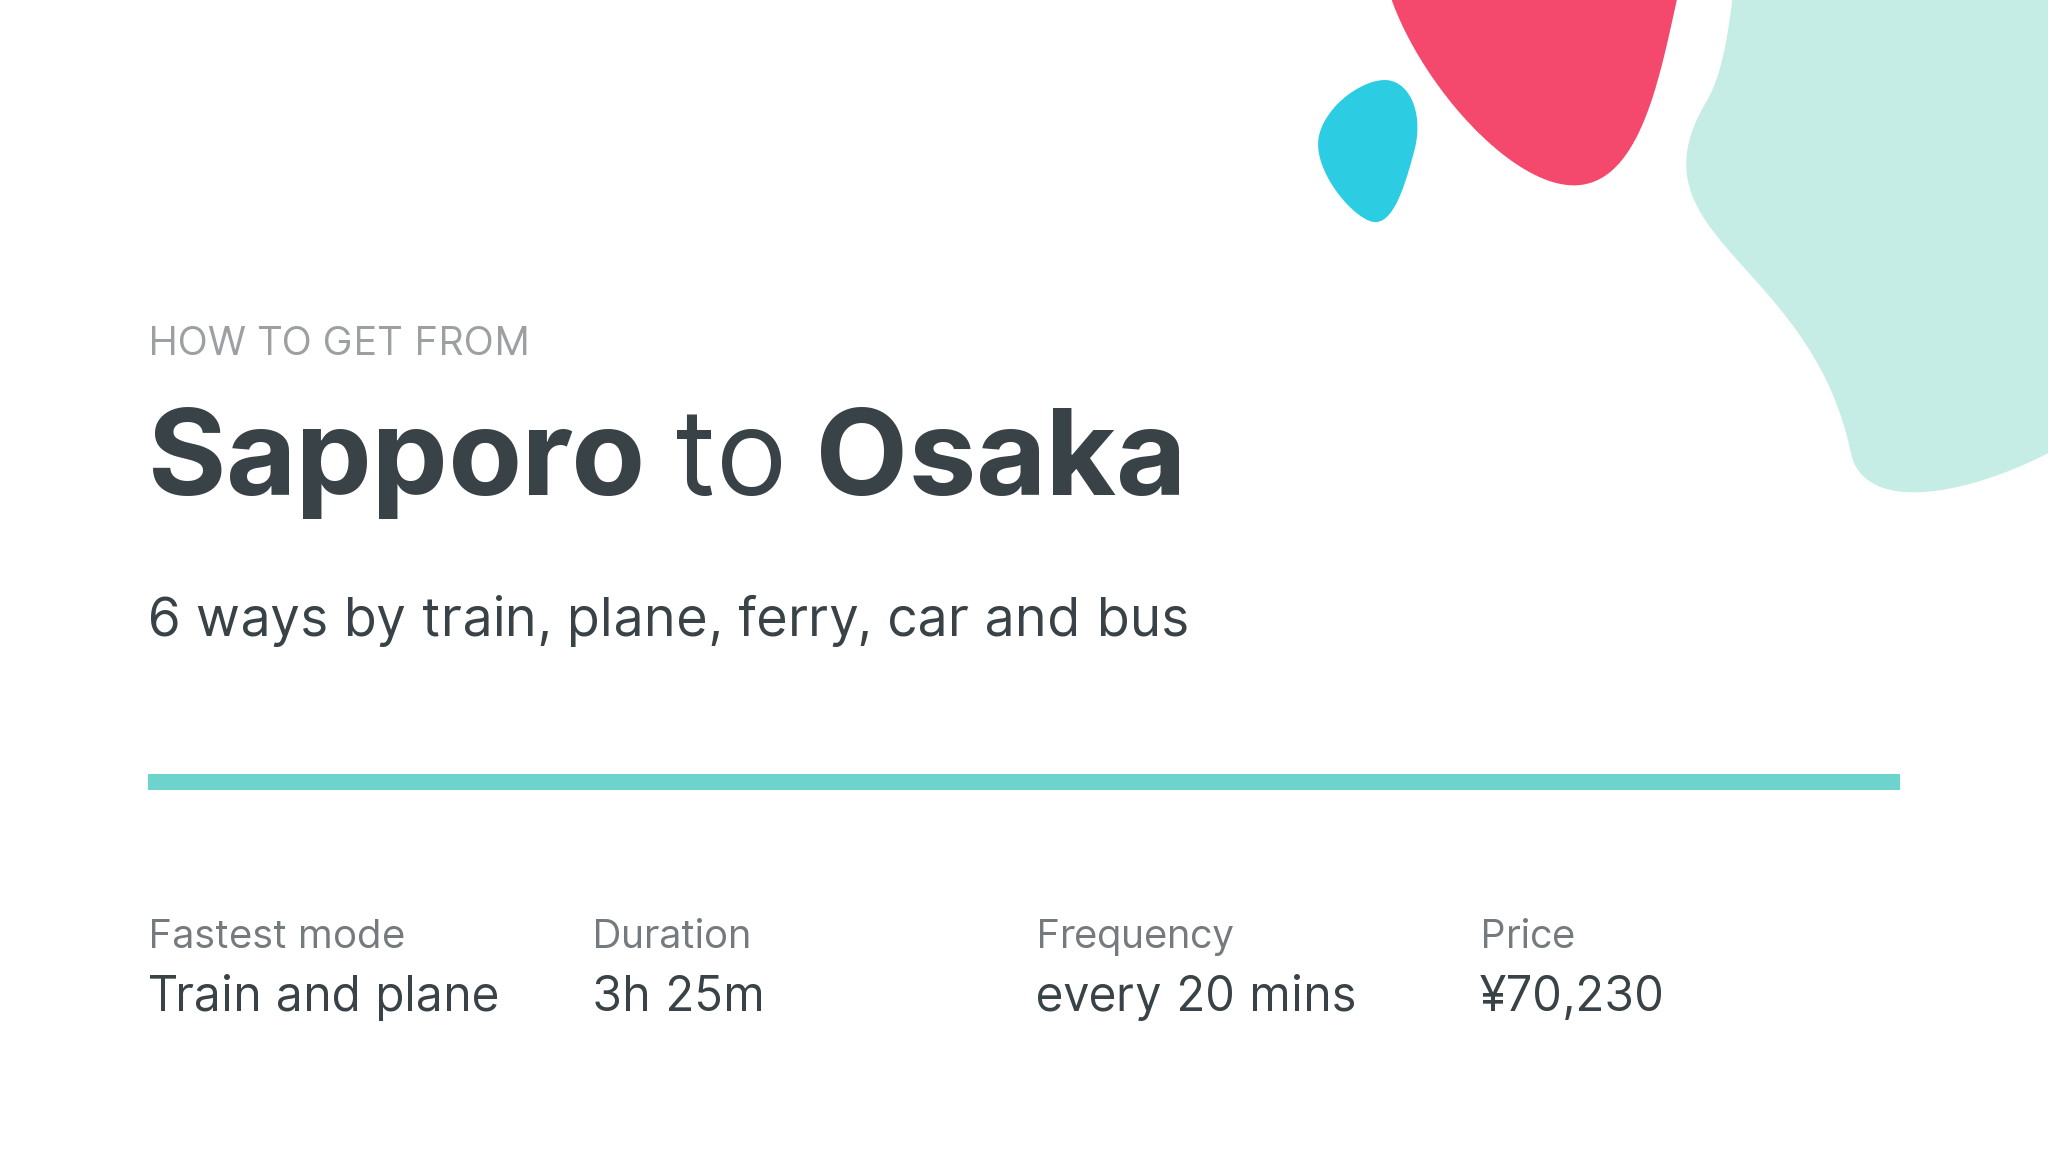 How do I get from Sapporo to Osaka